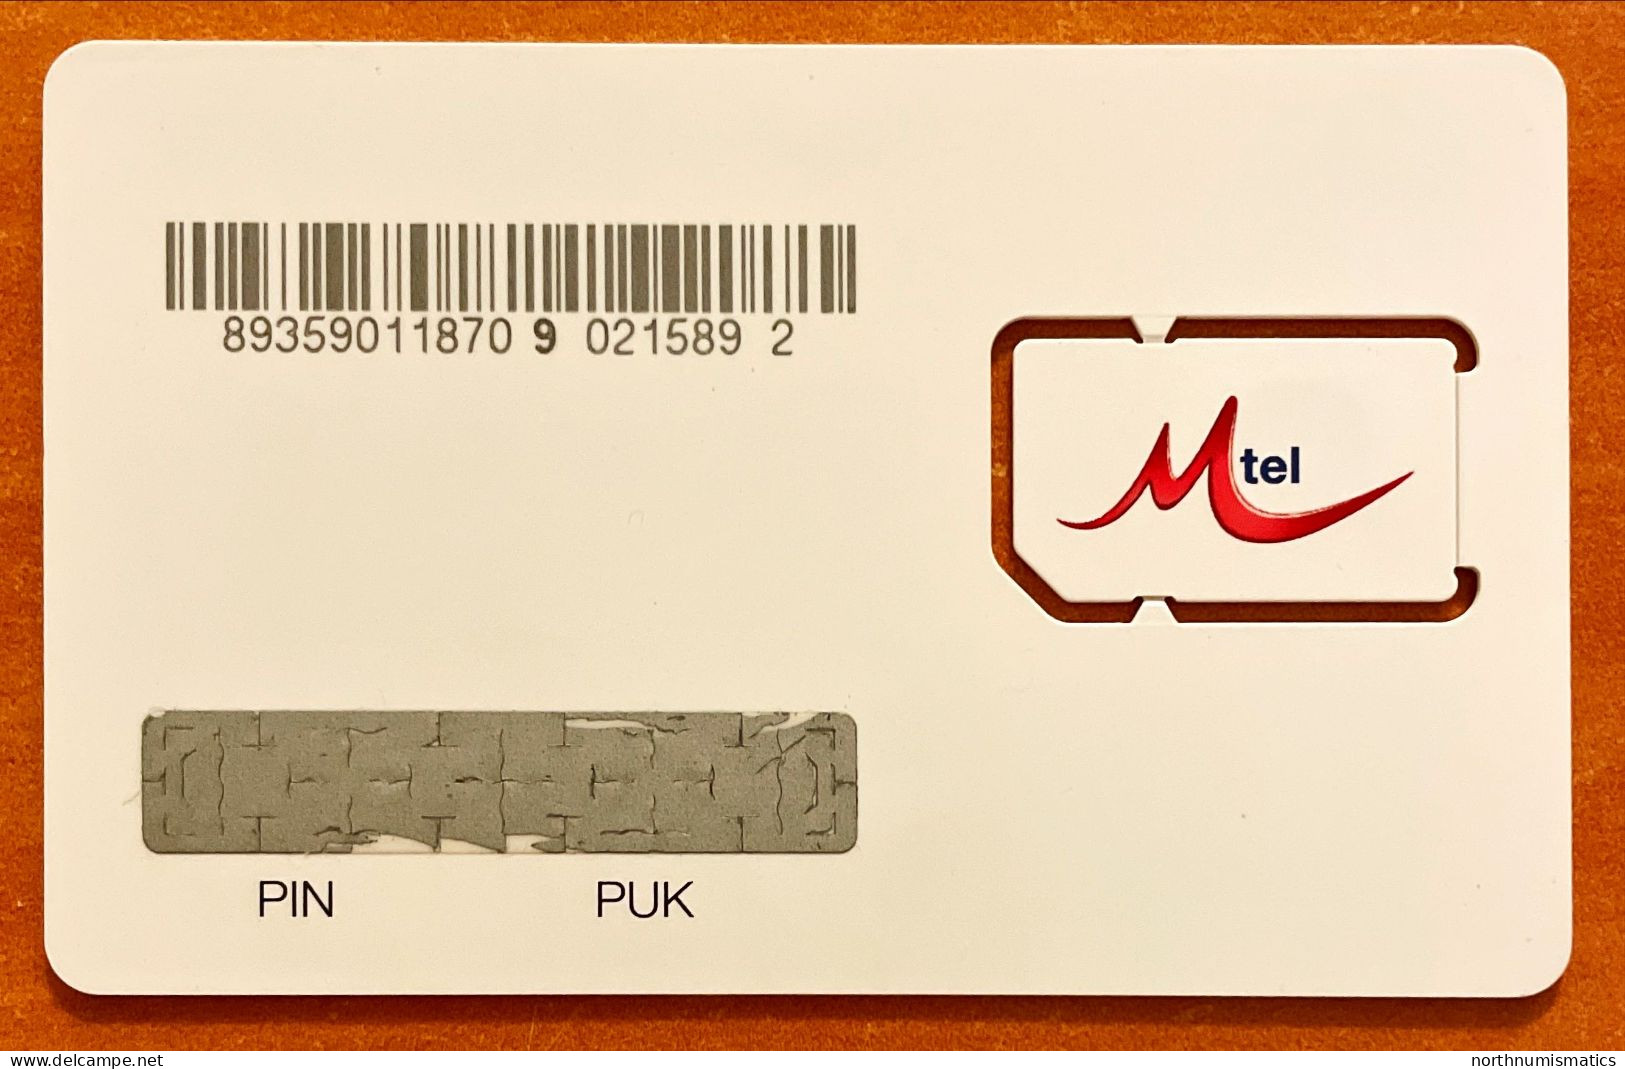 Mtel  Gsm  Original Chip Sim Card Unused - Collections